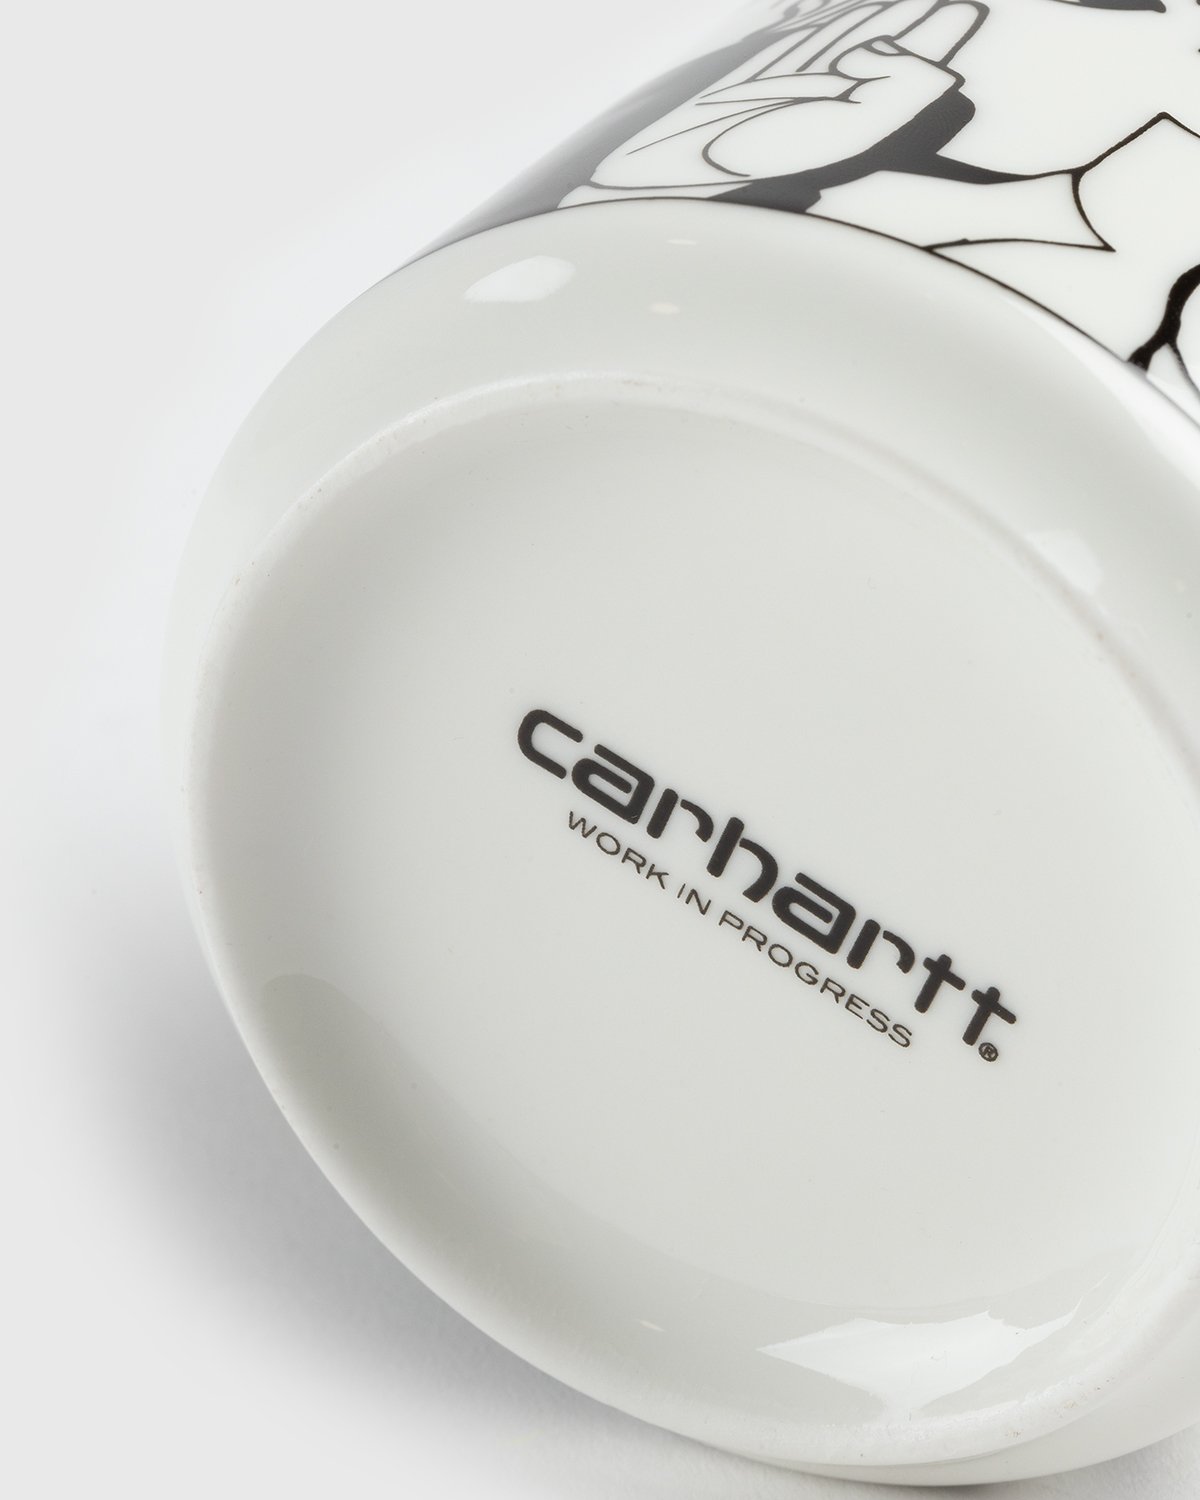 Carhartt WIP - Whisper Mug White Black - Lifestyle - White - Image 5